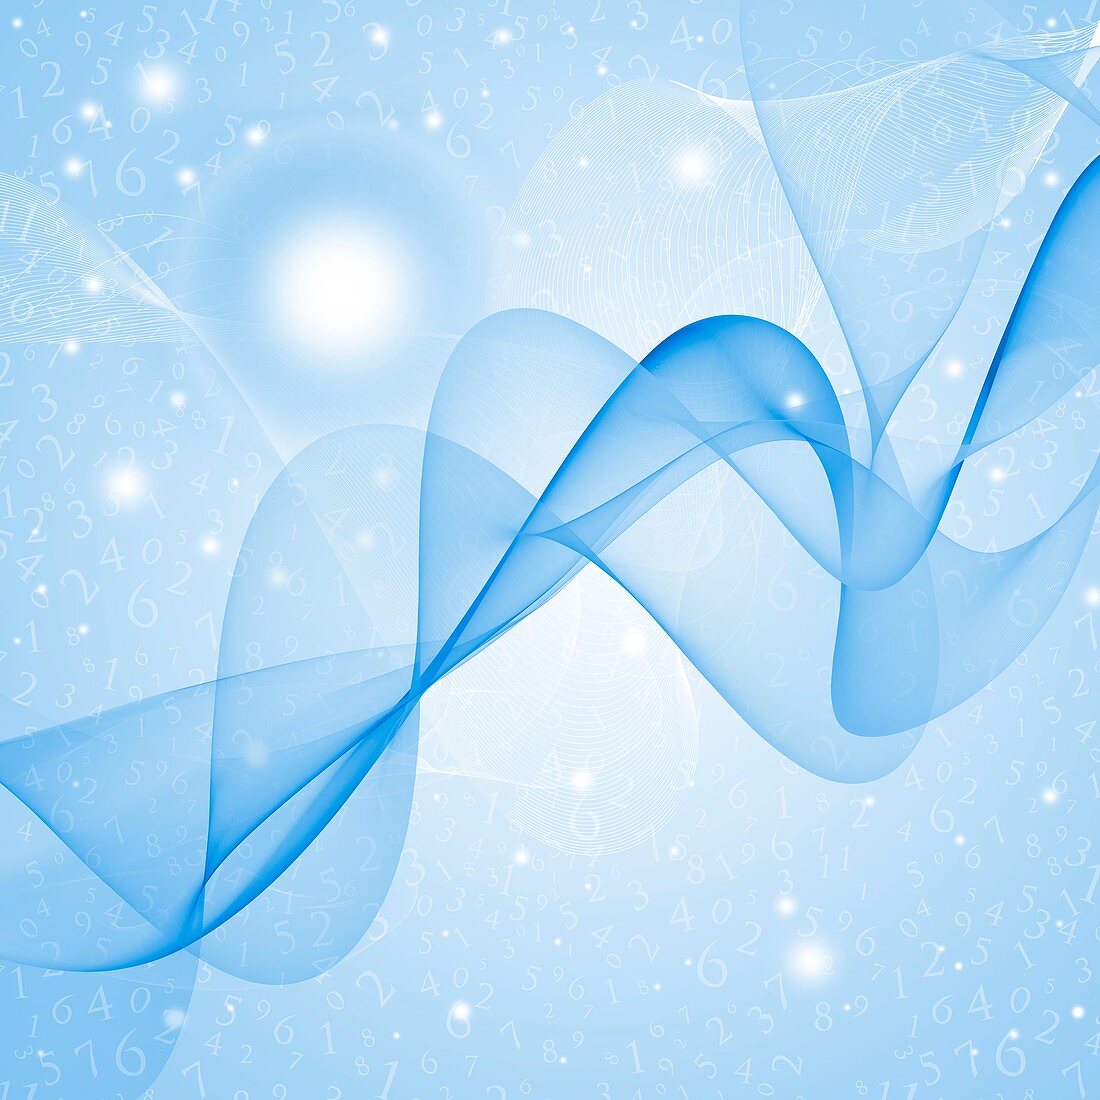 Blue swirls, illustration